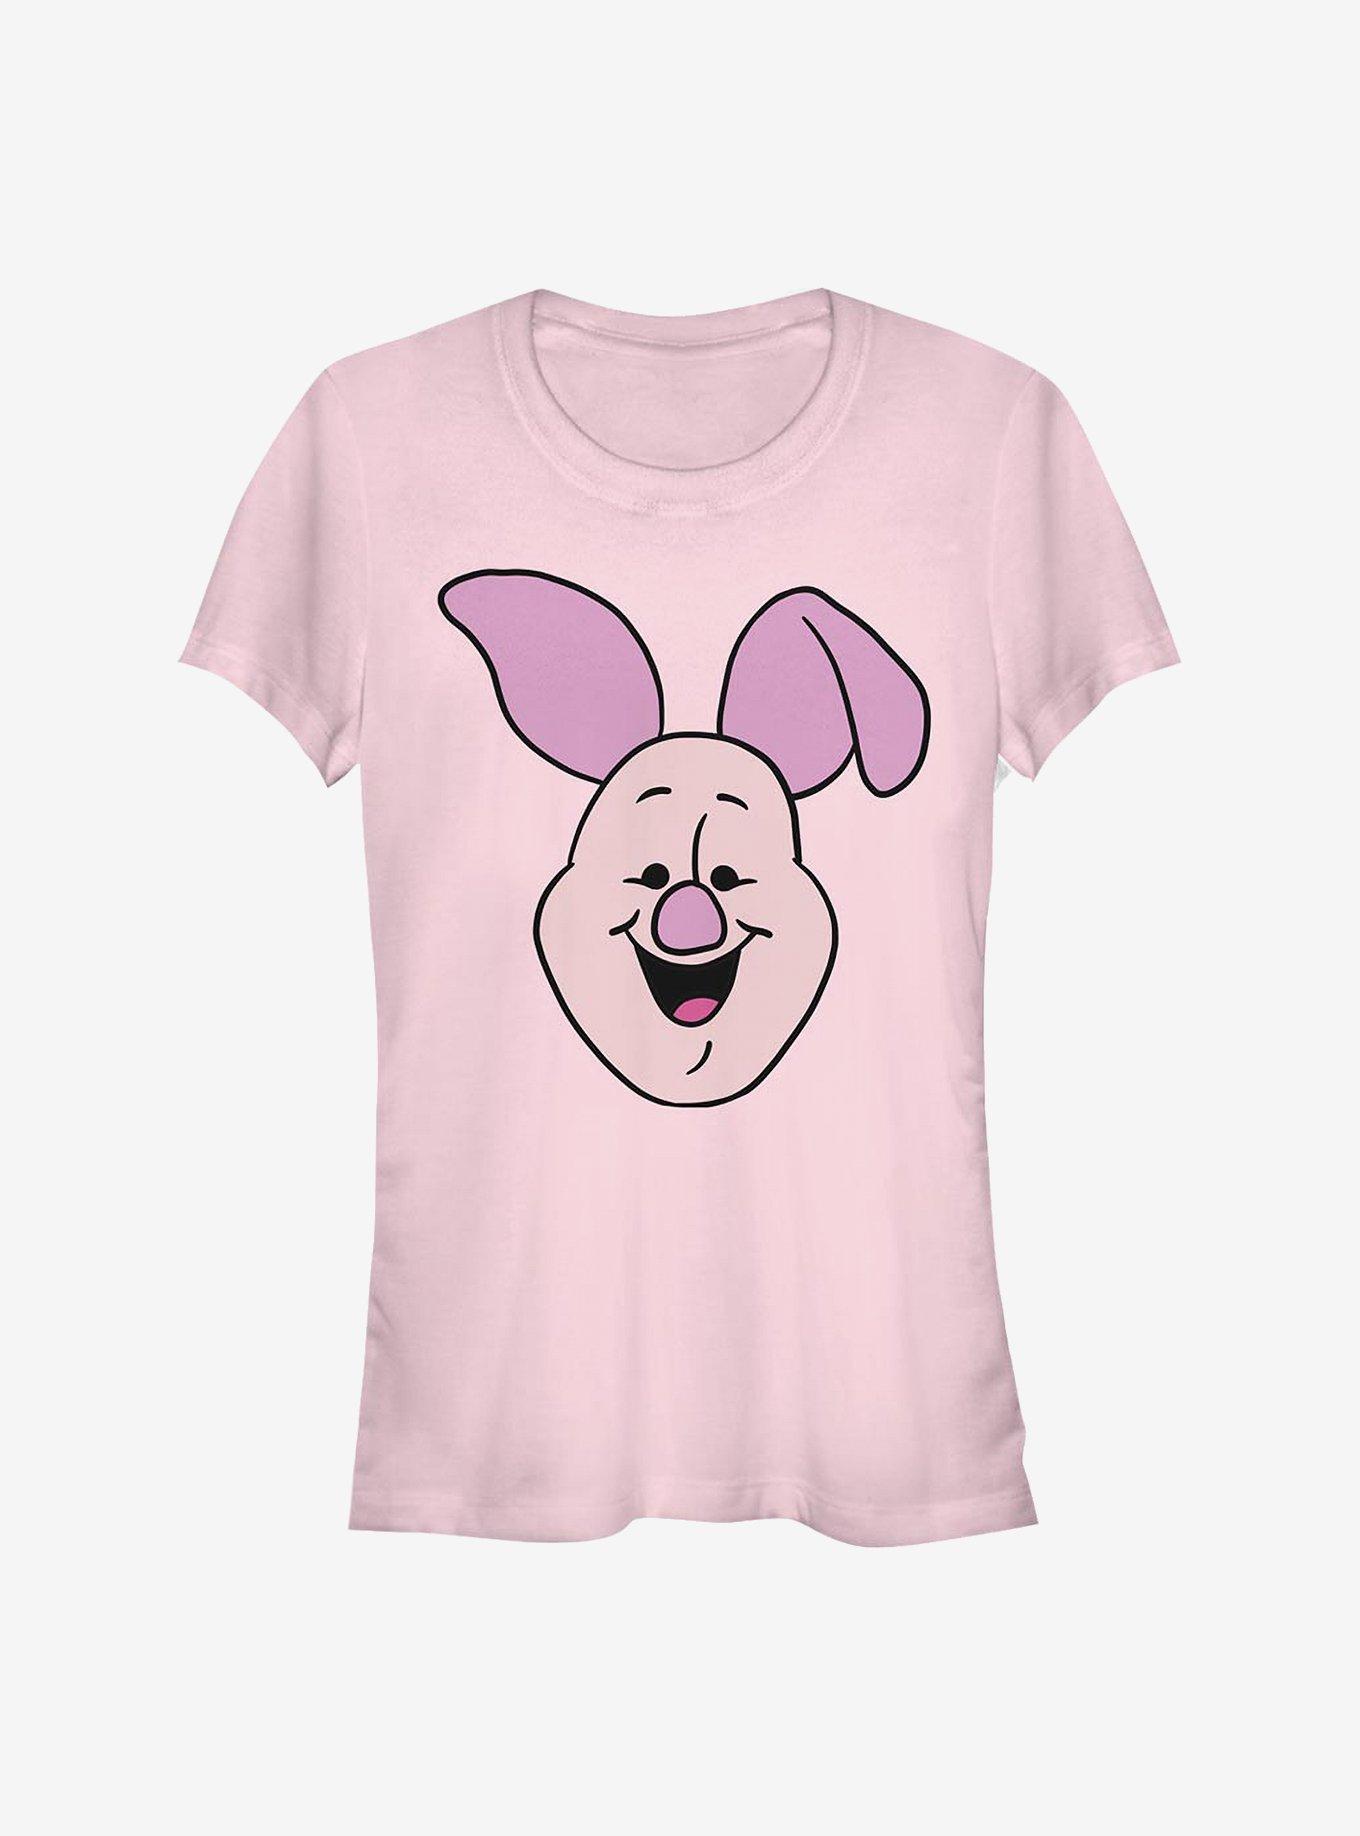 Disney Winnie The Pooh Piglet Big Face Girls T-Shirt, LIGHT PINK, hi-res